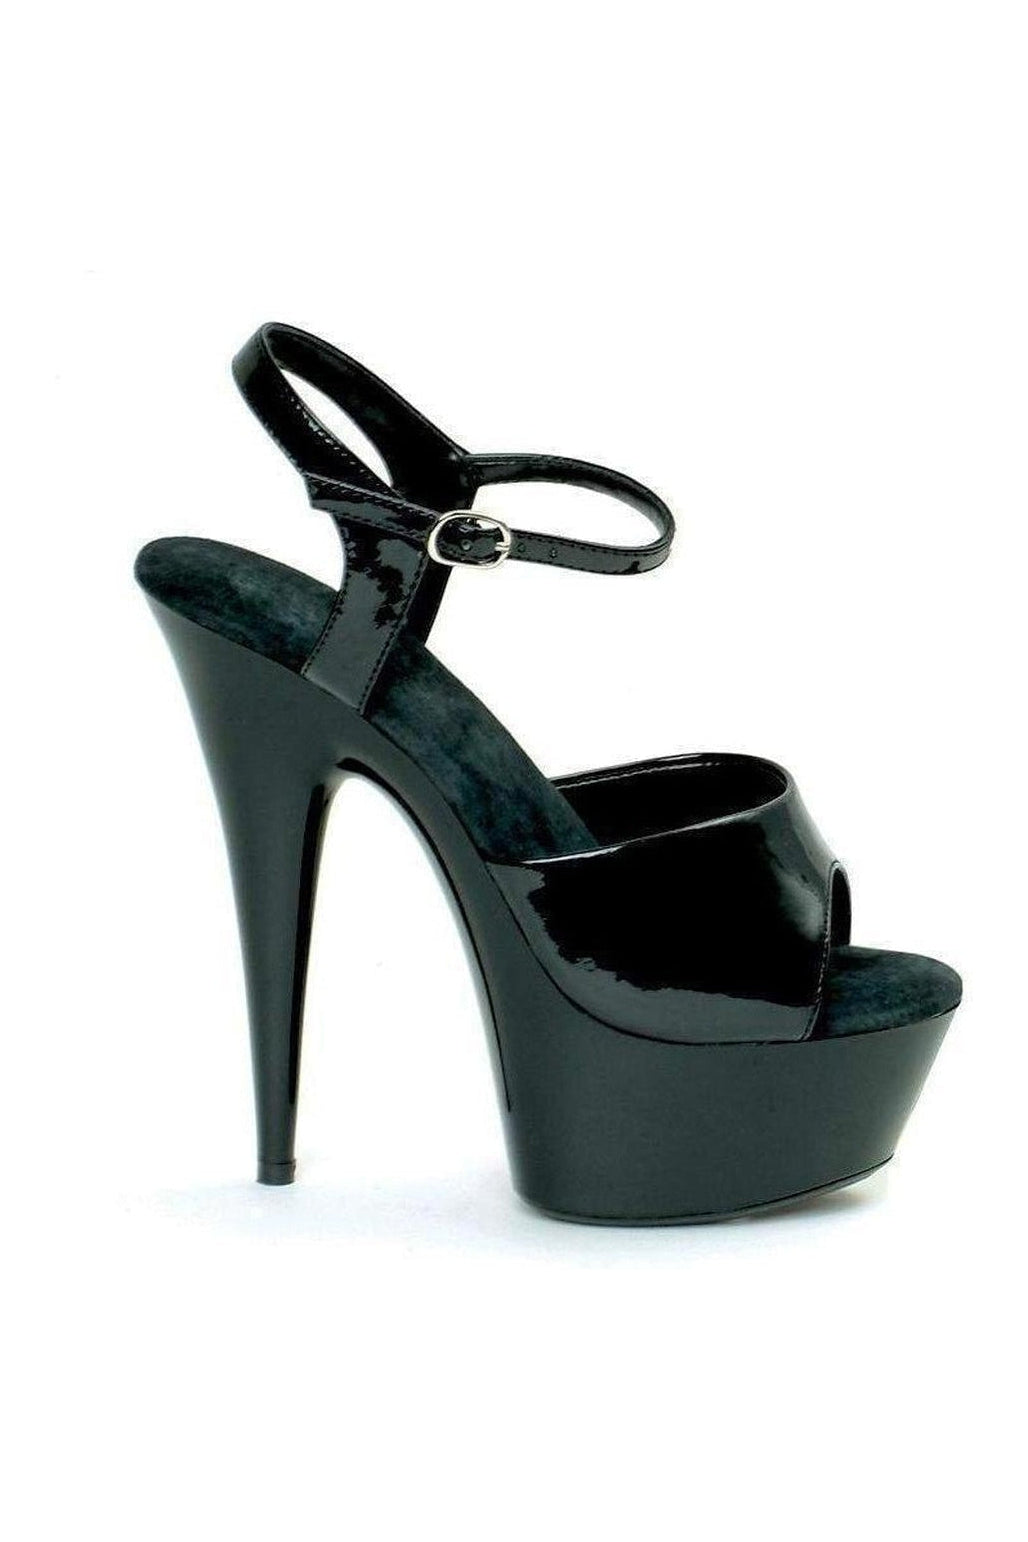 Ellie Shoes Black Sandals Platform Stripper Shoes | Buy at Sexyshoes.com